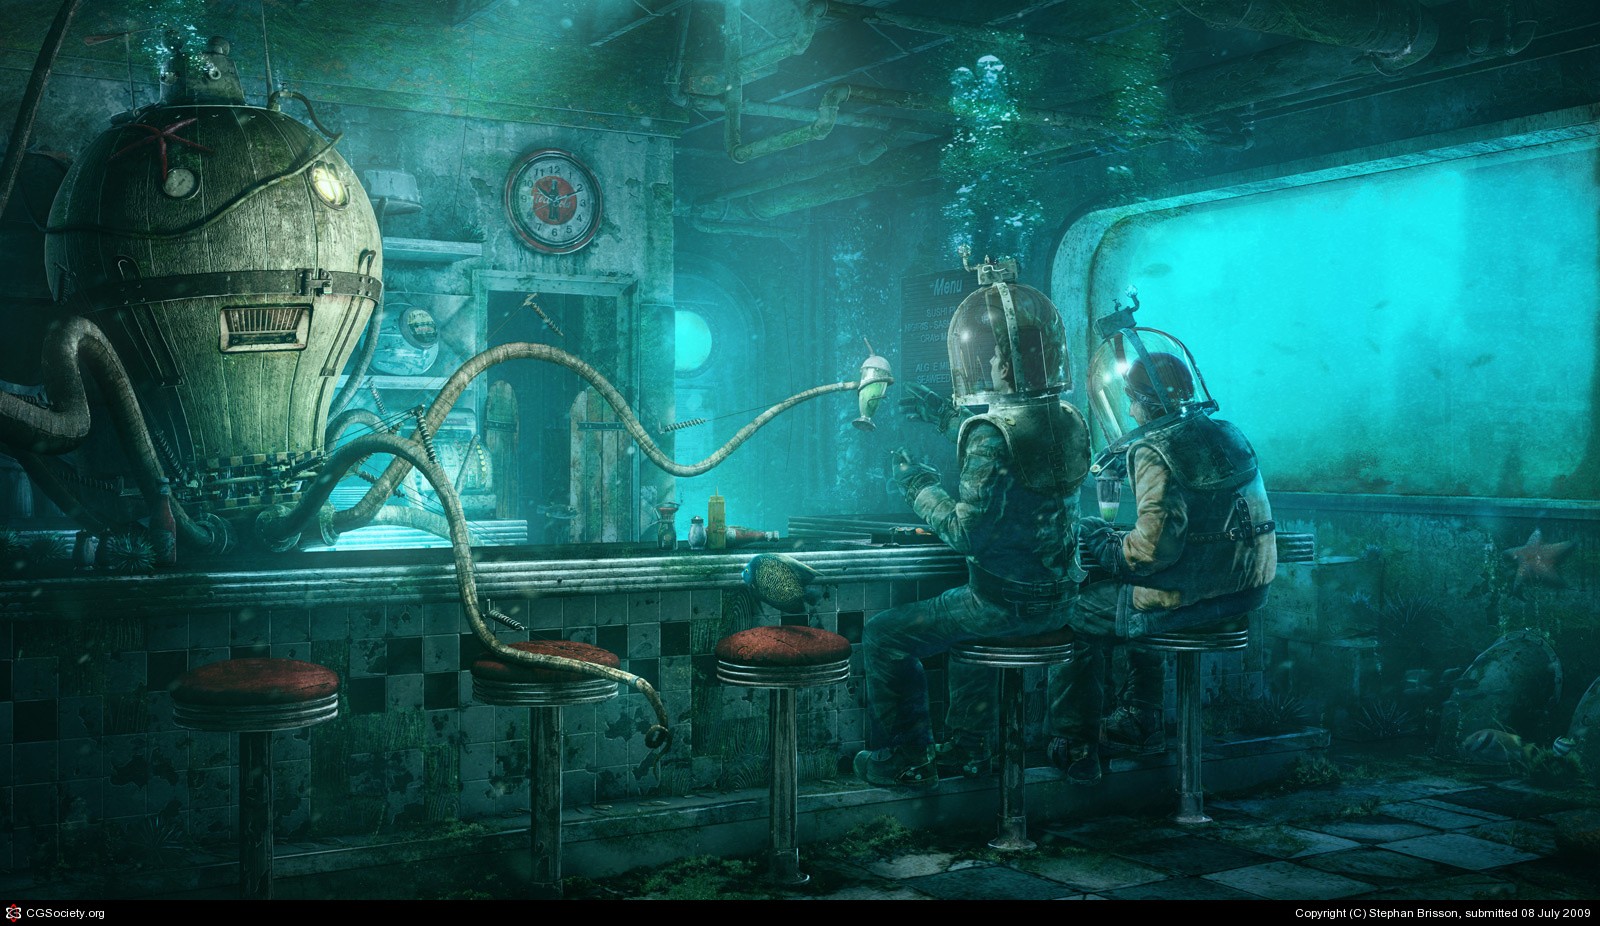 General 1600x926 underwater restaurant robot octopus fantasy art science fiction futuristic cyan milkshake Coca-Cola diner turquoise